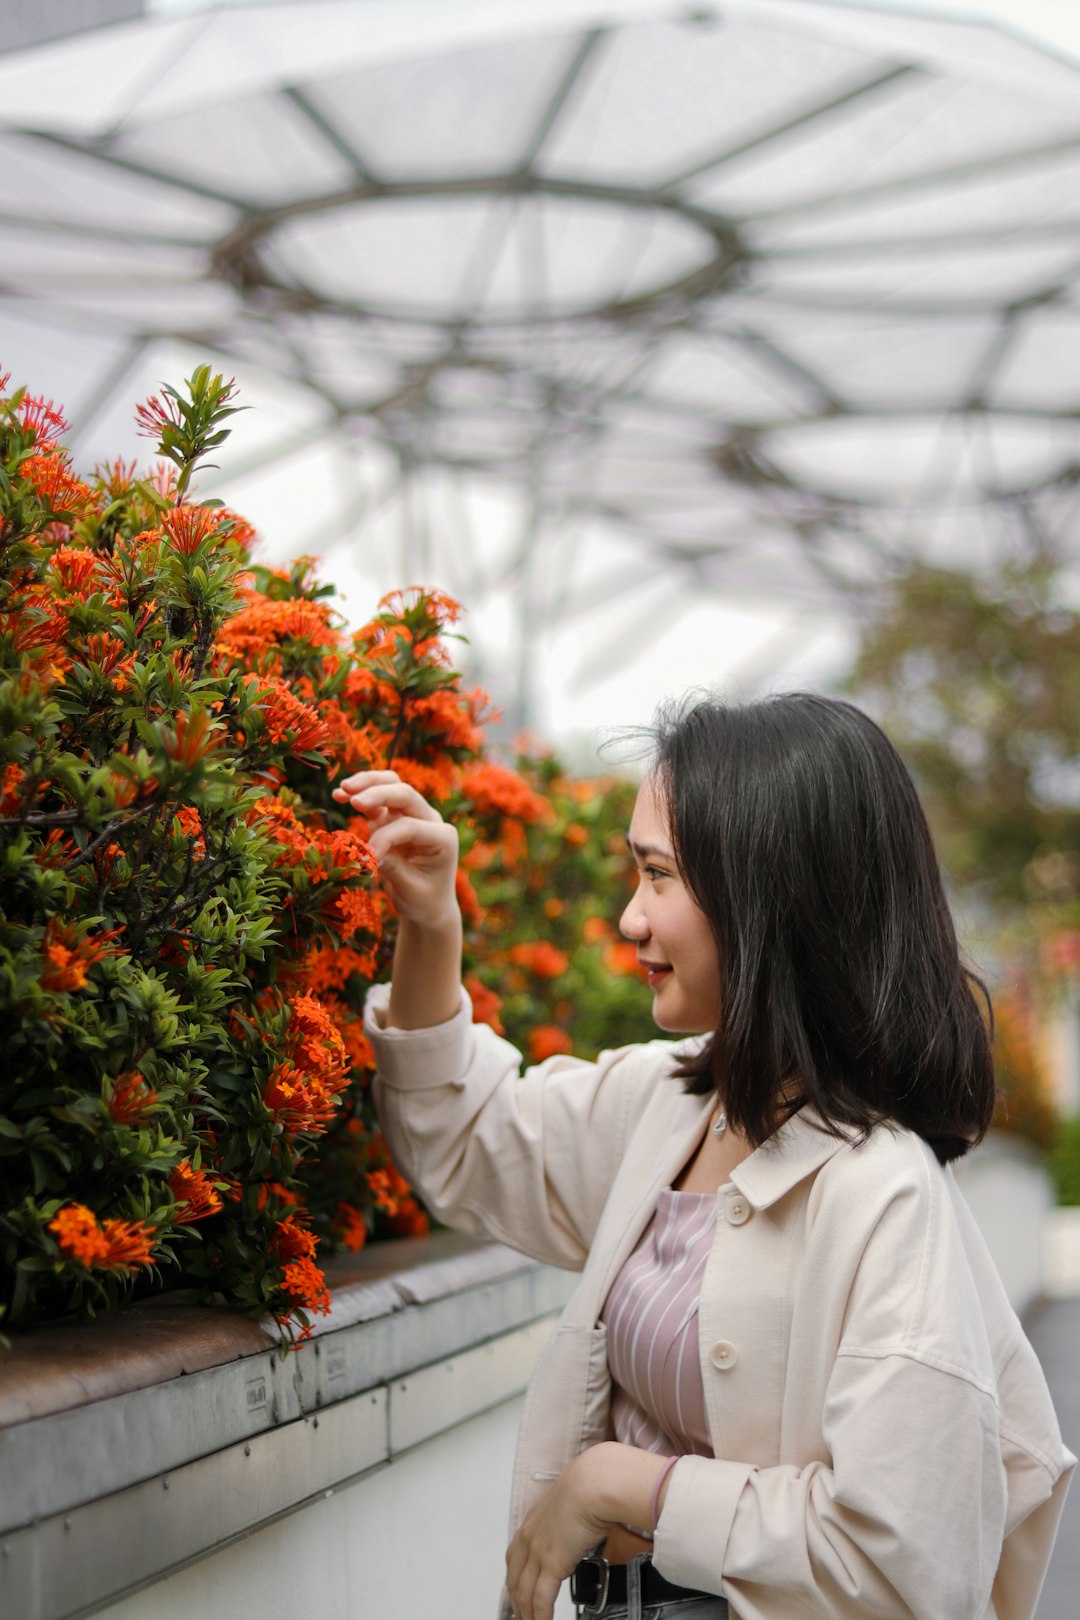 woman in white coat holding orange flowers